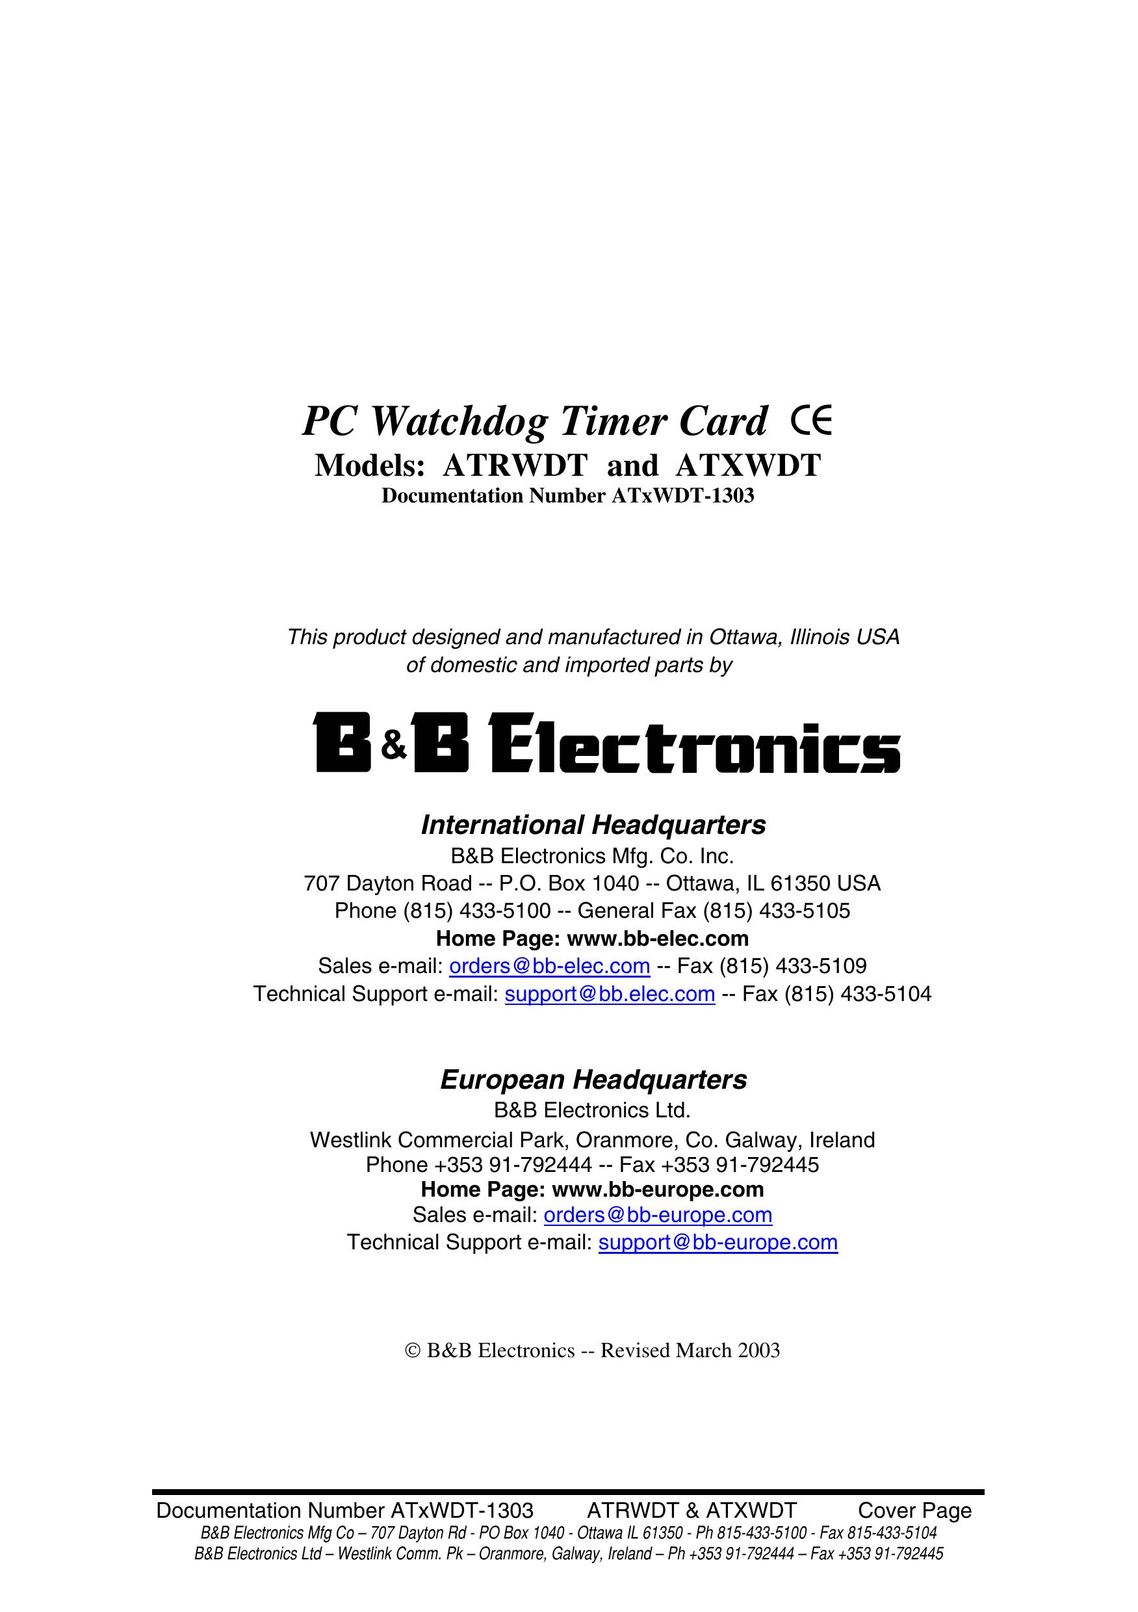 B&B Electronics ATXWDT Network Card User Manual